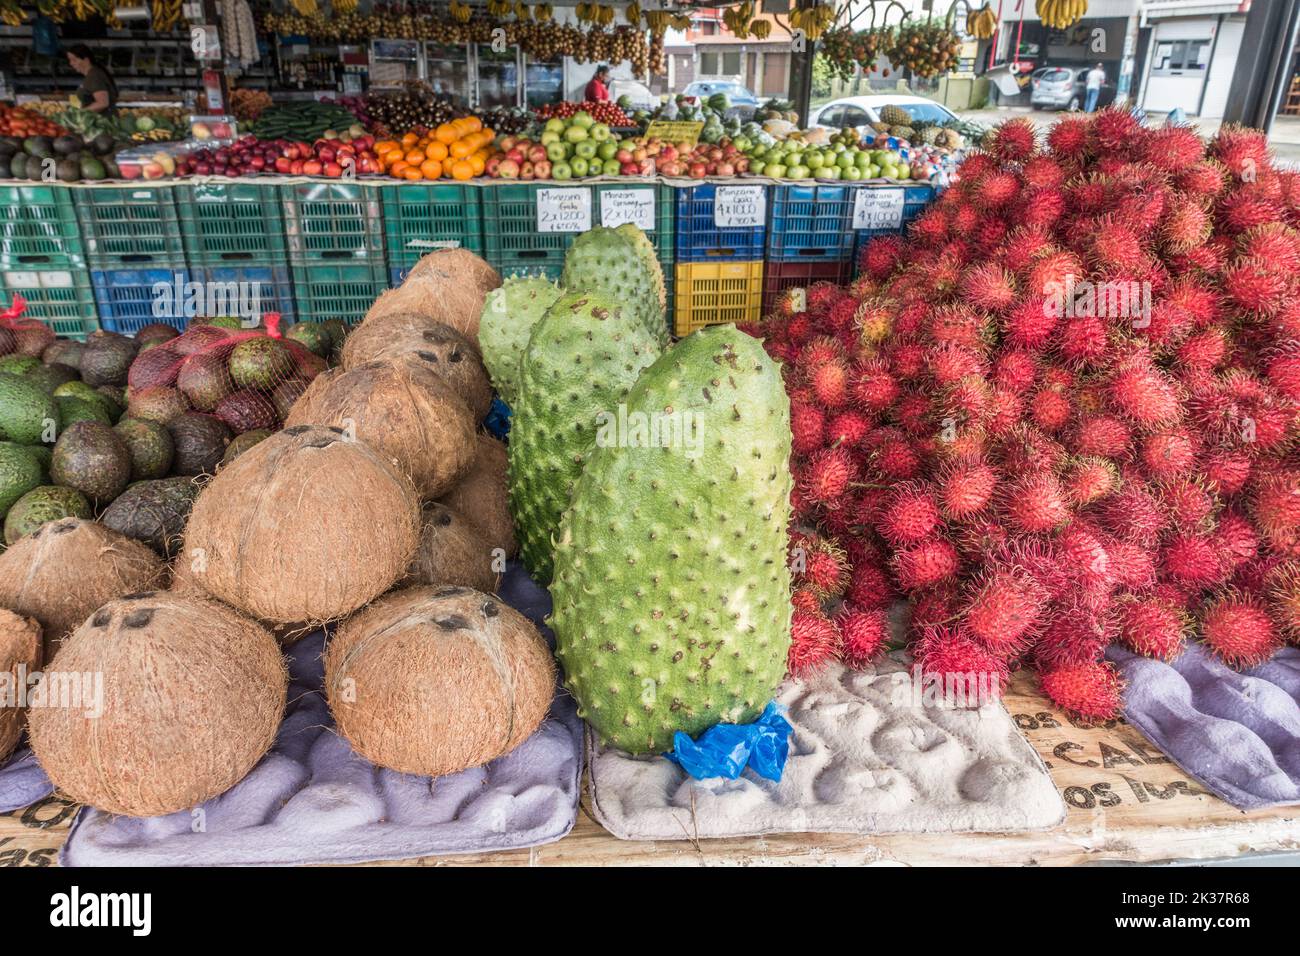 Breadfruit (Artocarpus altilis), Rambutan (Nephelium lappaceum) and coconuts (Cocos nucifera) and other fruit for sale at a market in Costa Rica. Stock Photo